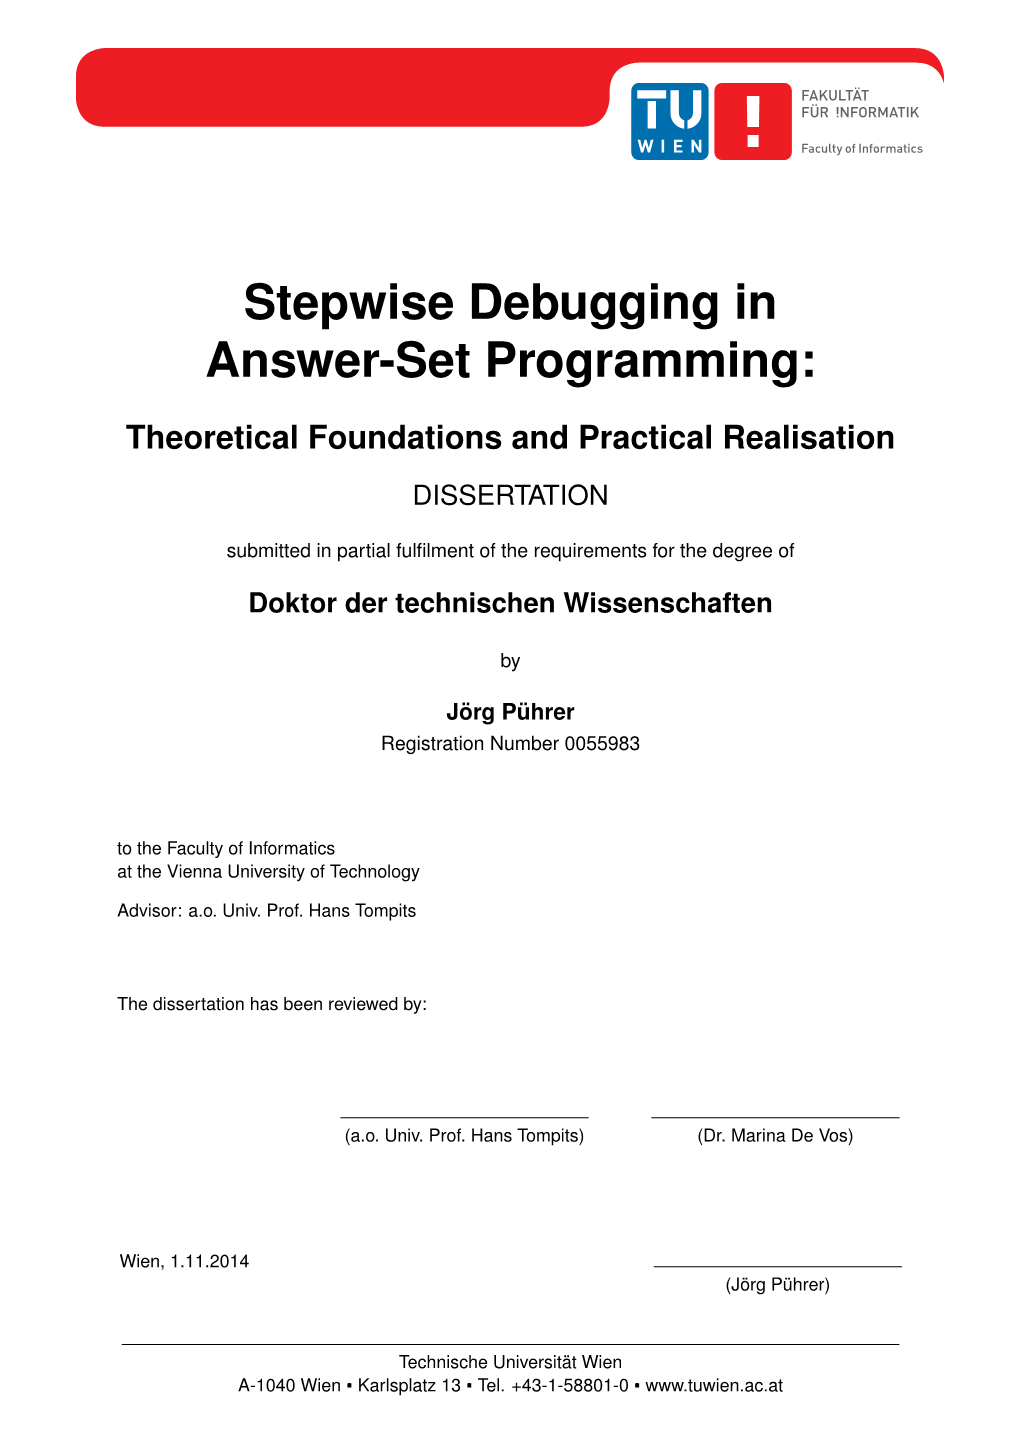 Stepwise Debugging in Answer-Set Programming